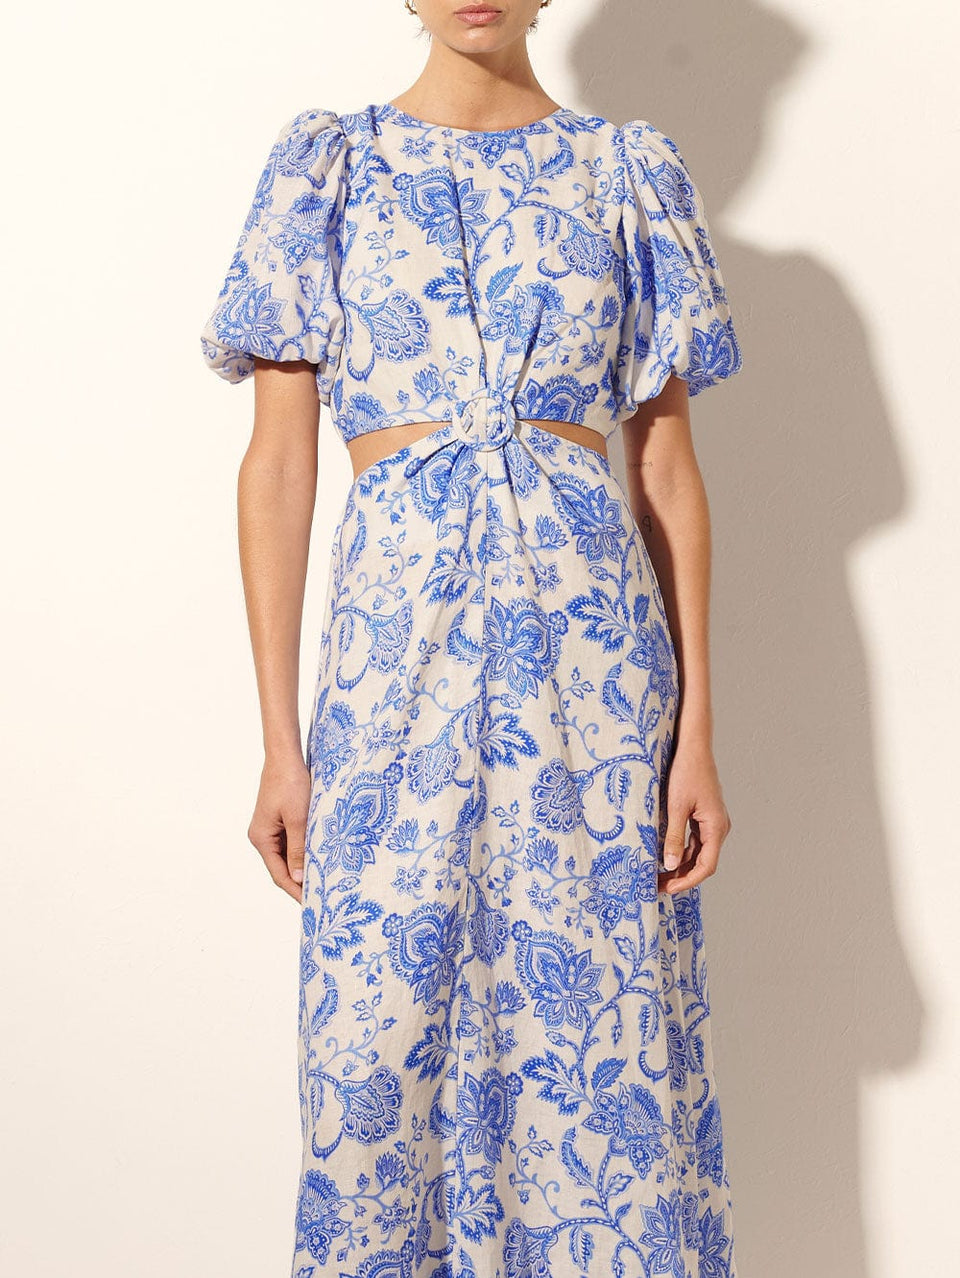 Athena Maxi Dress KIVARI | Model wears blue and white paisley maxi dress close up